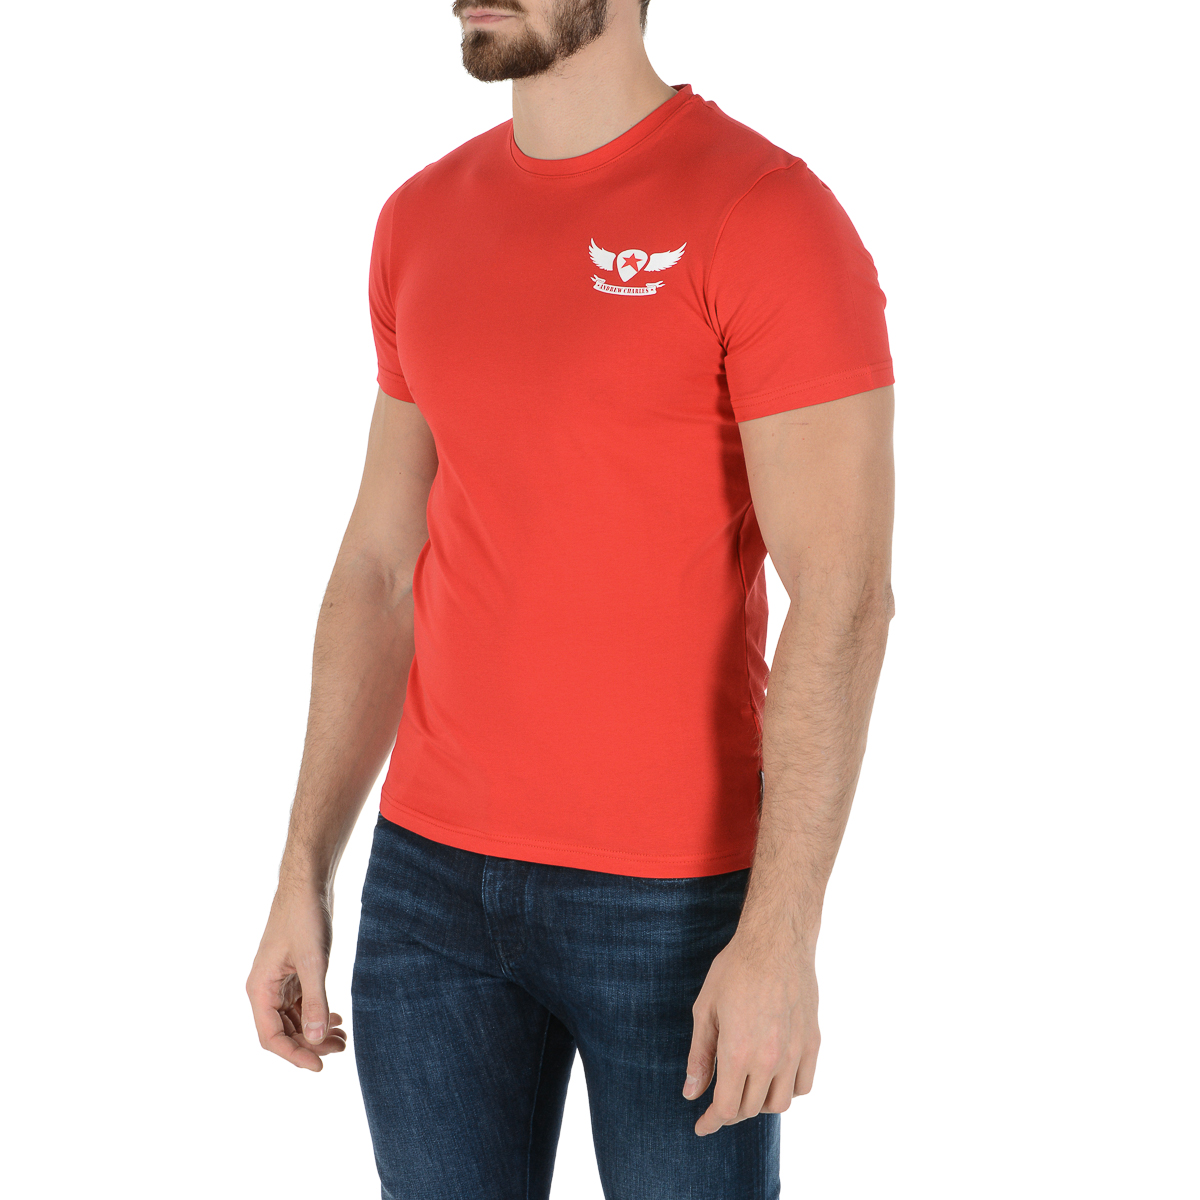 Andrew Charles Mens T-Shirt Short Sleeves Round Neck Red KEITA